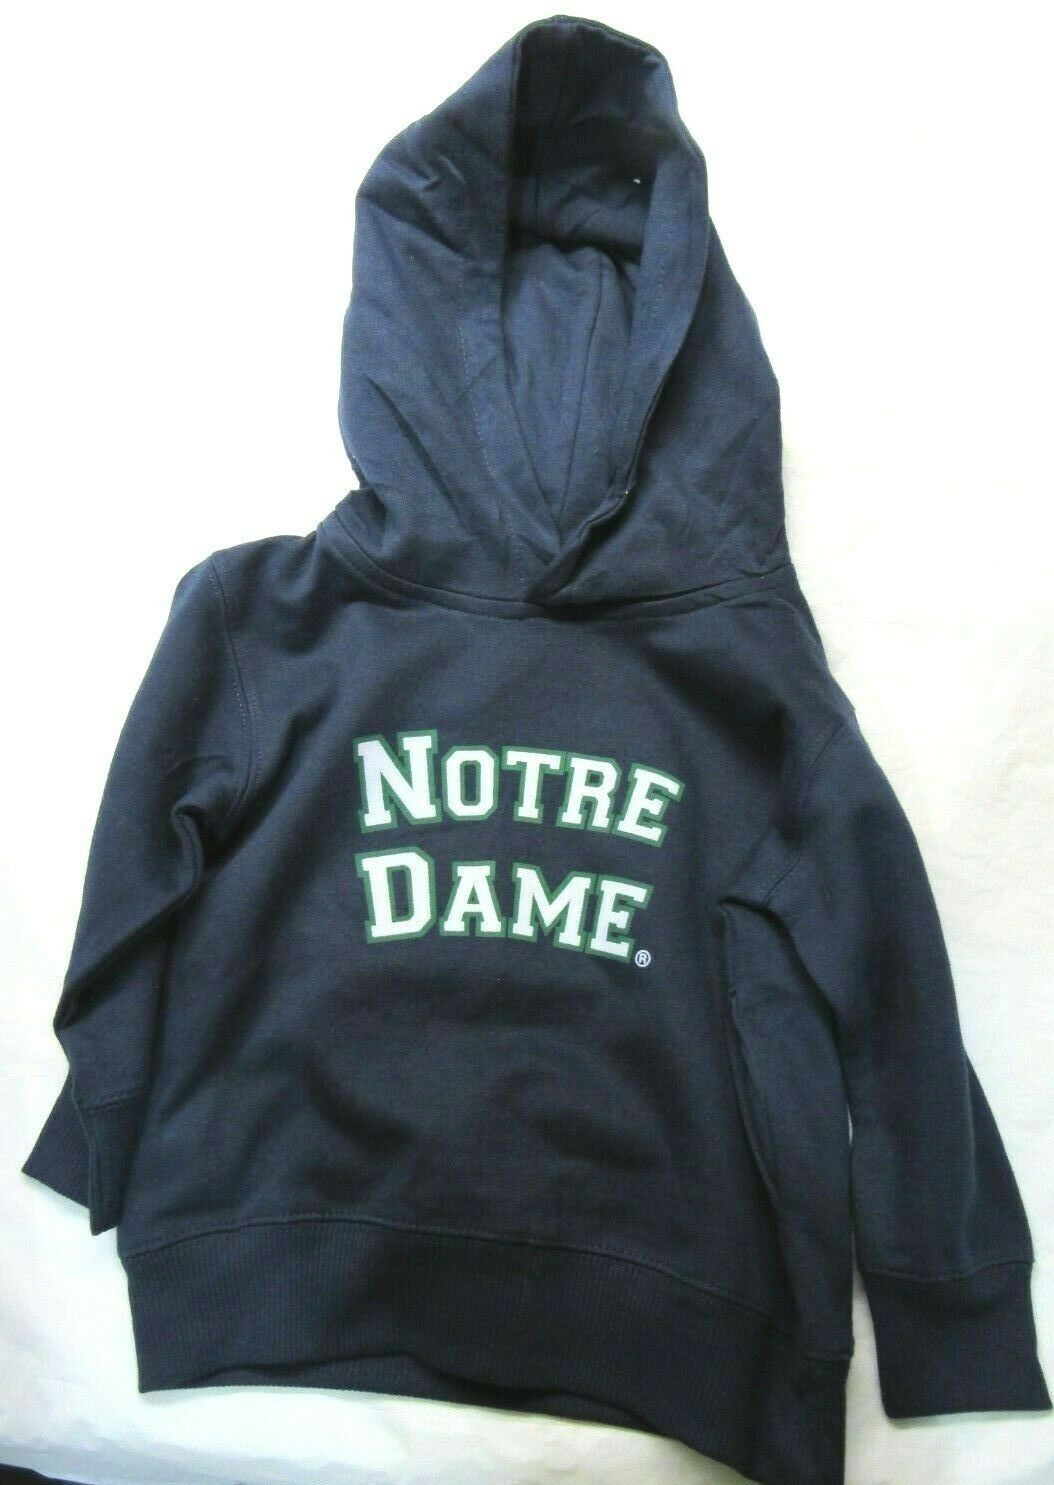 NCAA Notre Dame Silk Screened Full Name Logo Hooded Sweatshirt Two Feet Ahead - $29.99